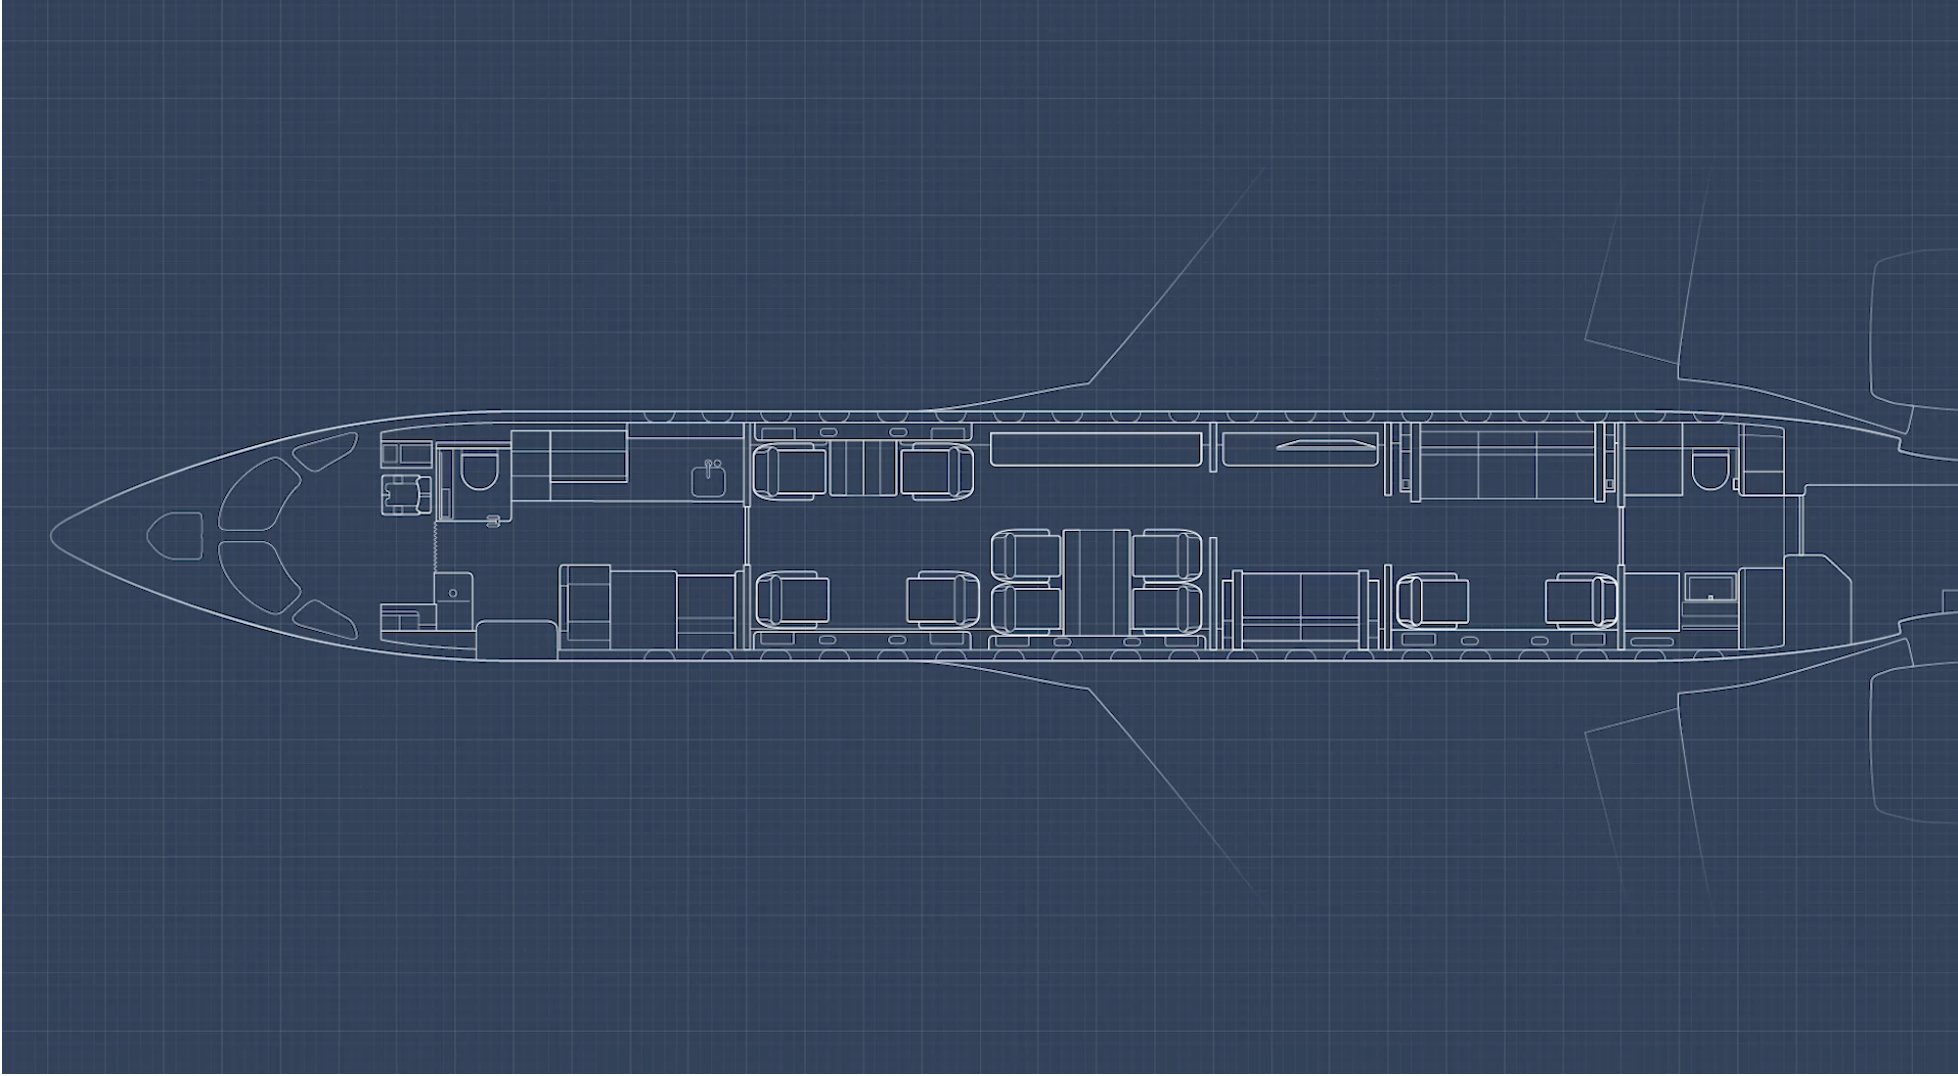 Dassault Falcon 10x layout